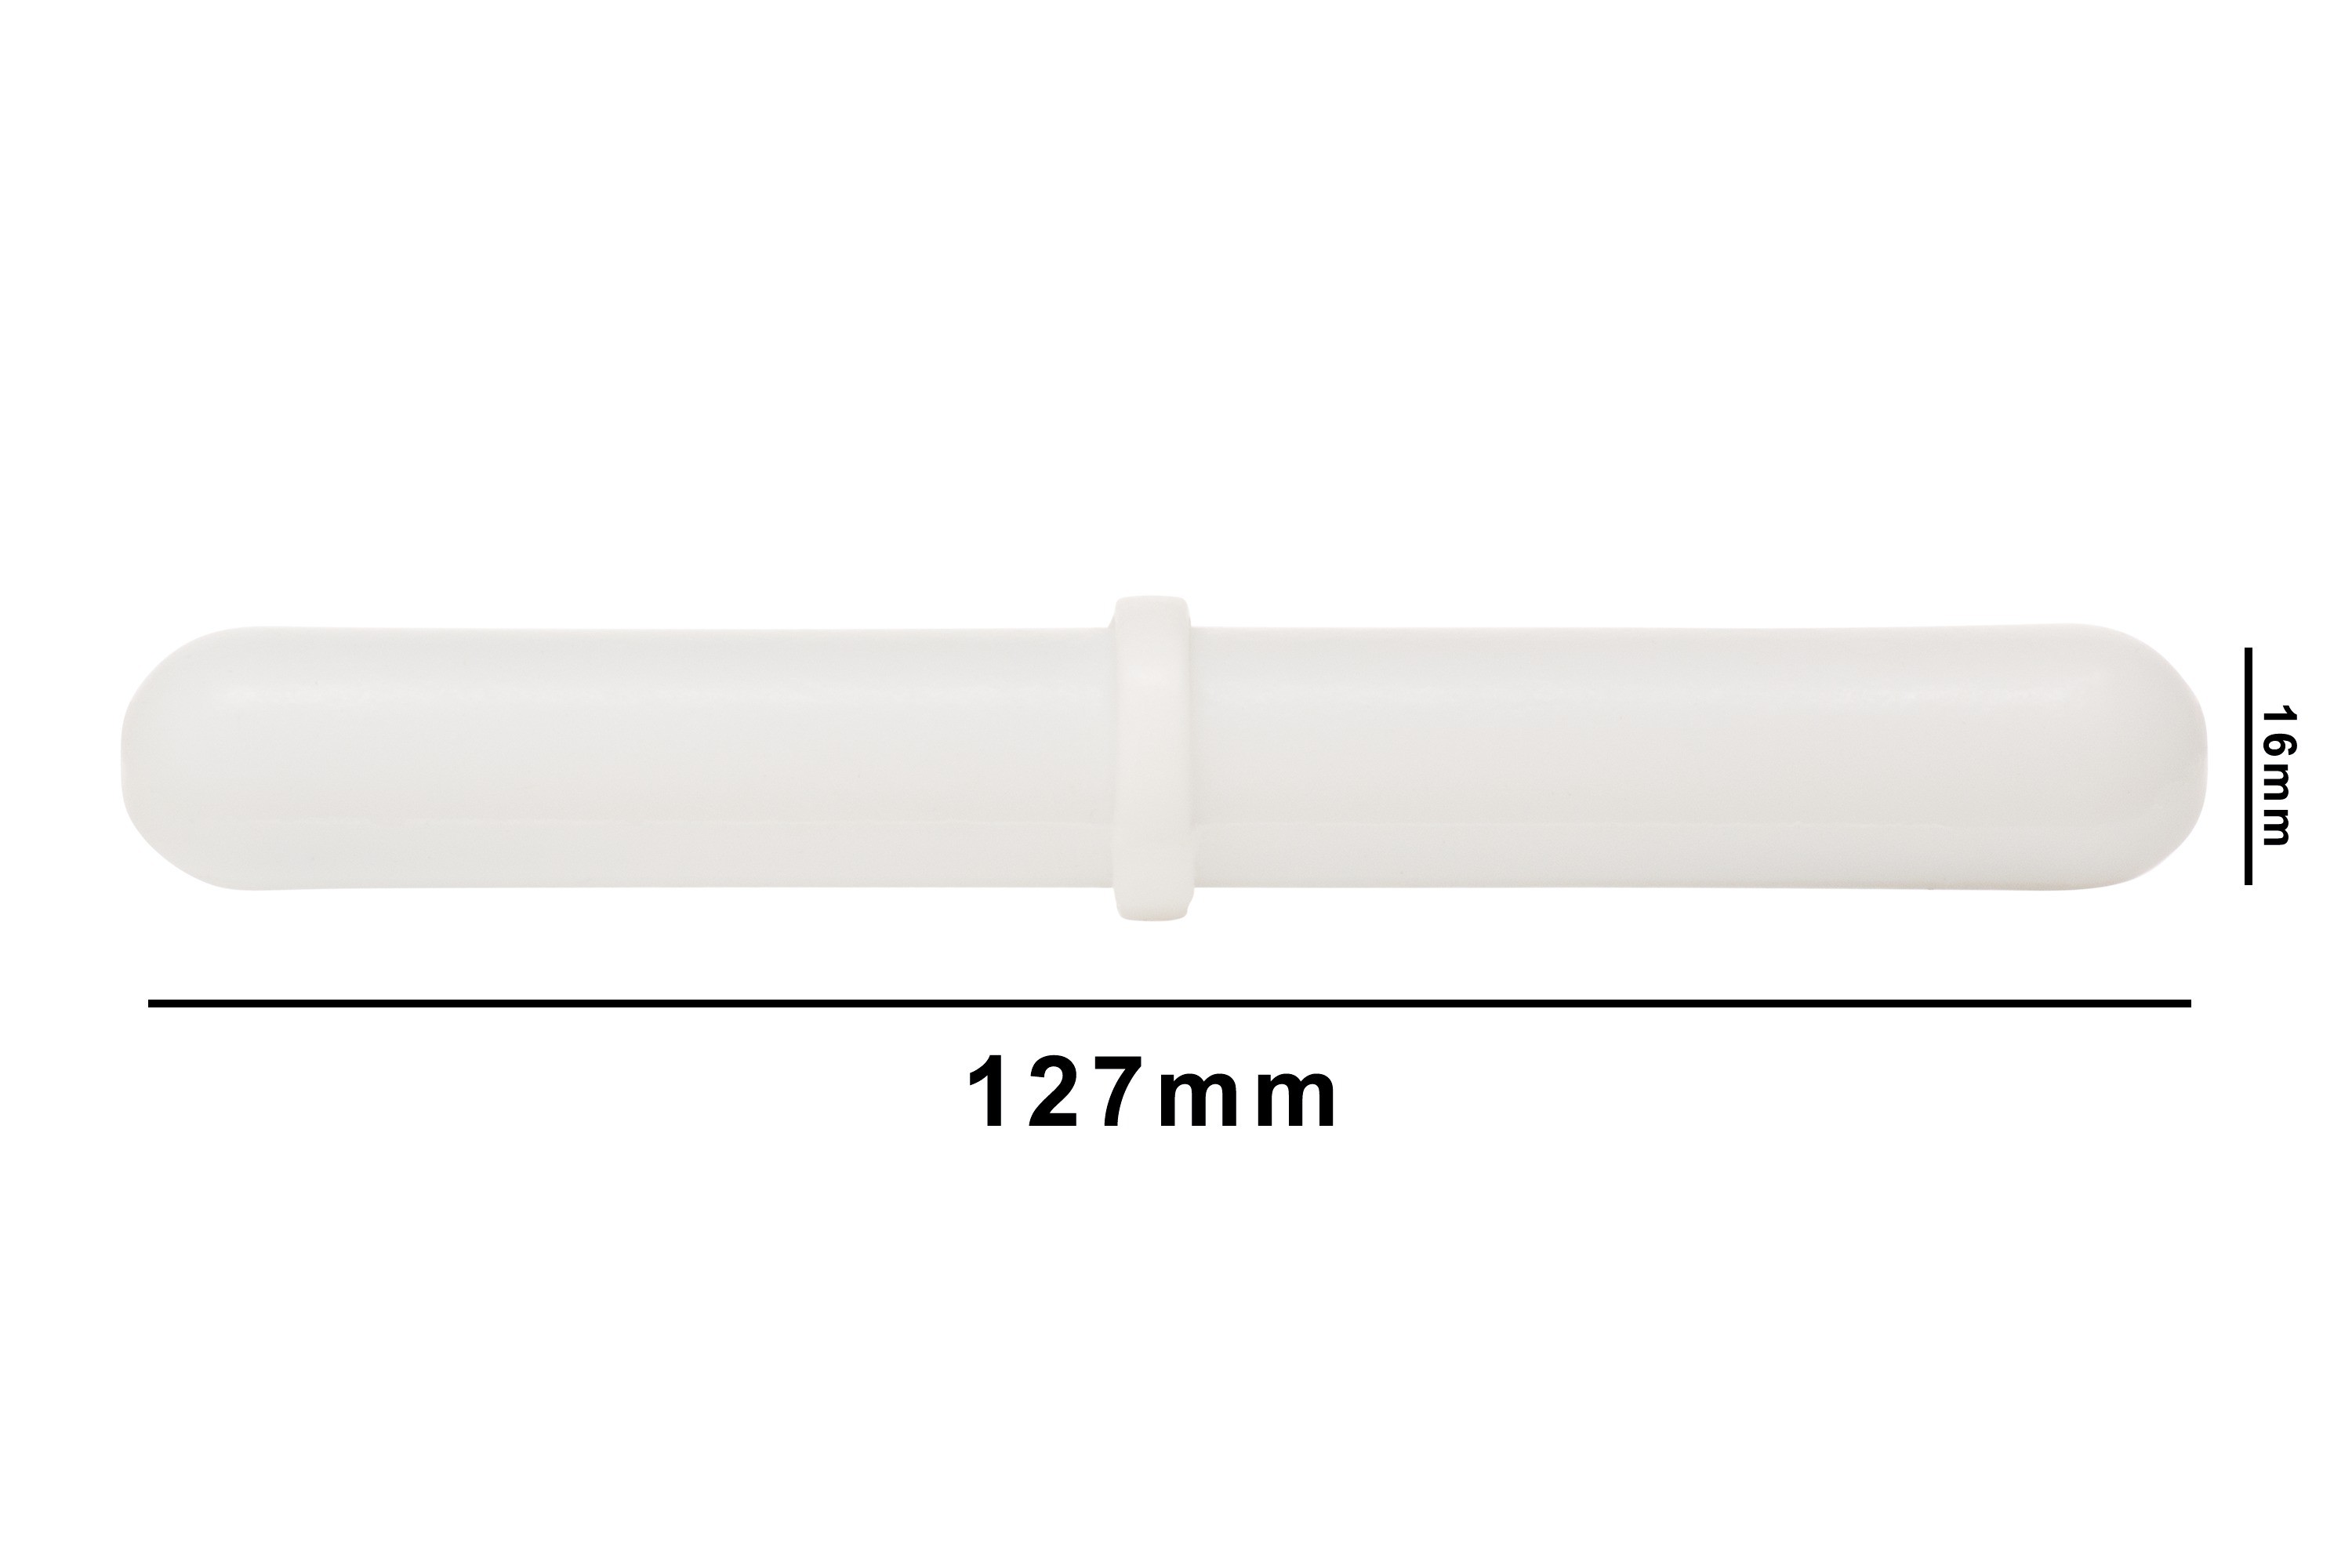 SP Bel-Art Spinbar Giant Polygon Teflon Magnetic Stirring Bar; 127 x 16mm, White, with Pivot Ring